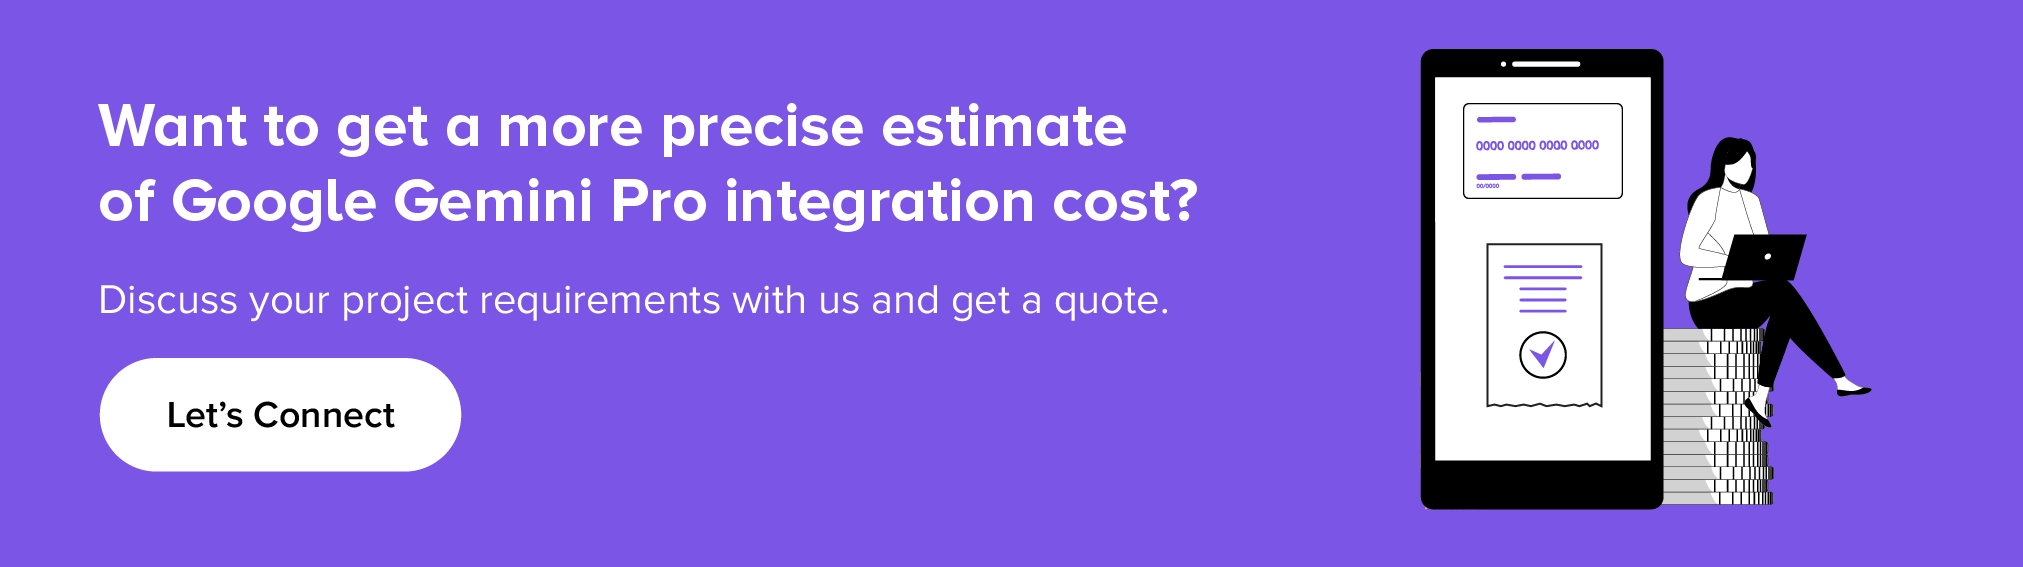 Google Gemini Pro integration cost